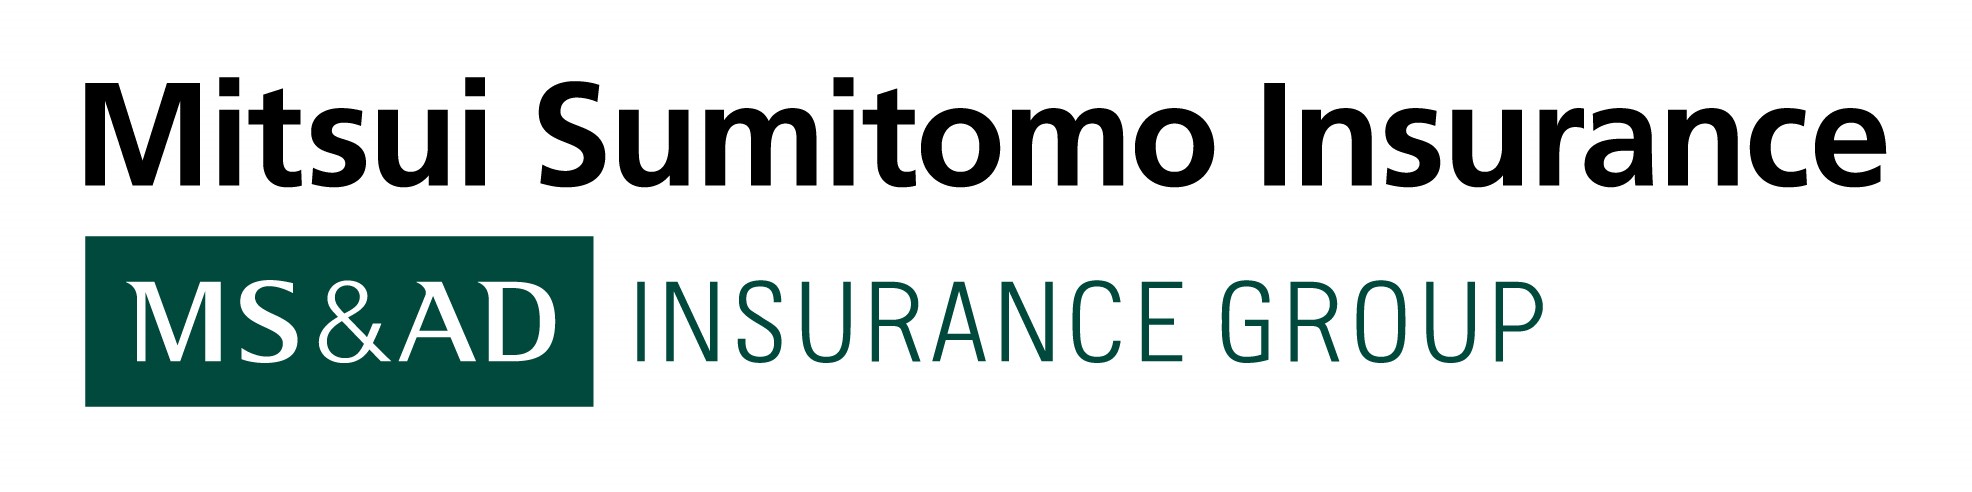 Mitsui Sumitomo Insurance MS&D INSURANCE GROUP